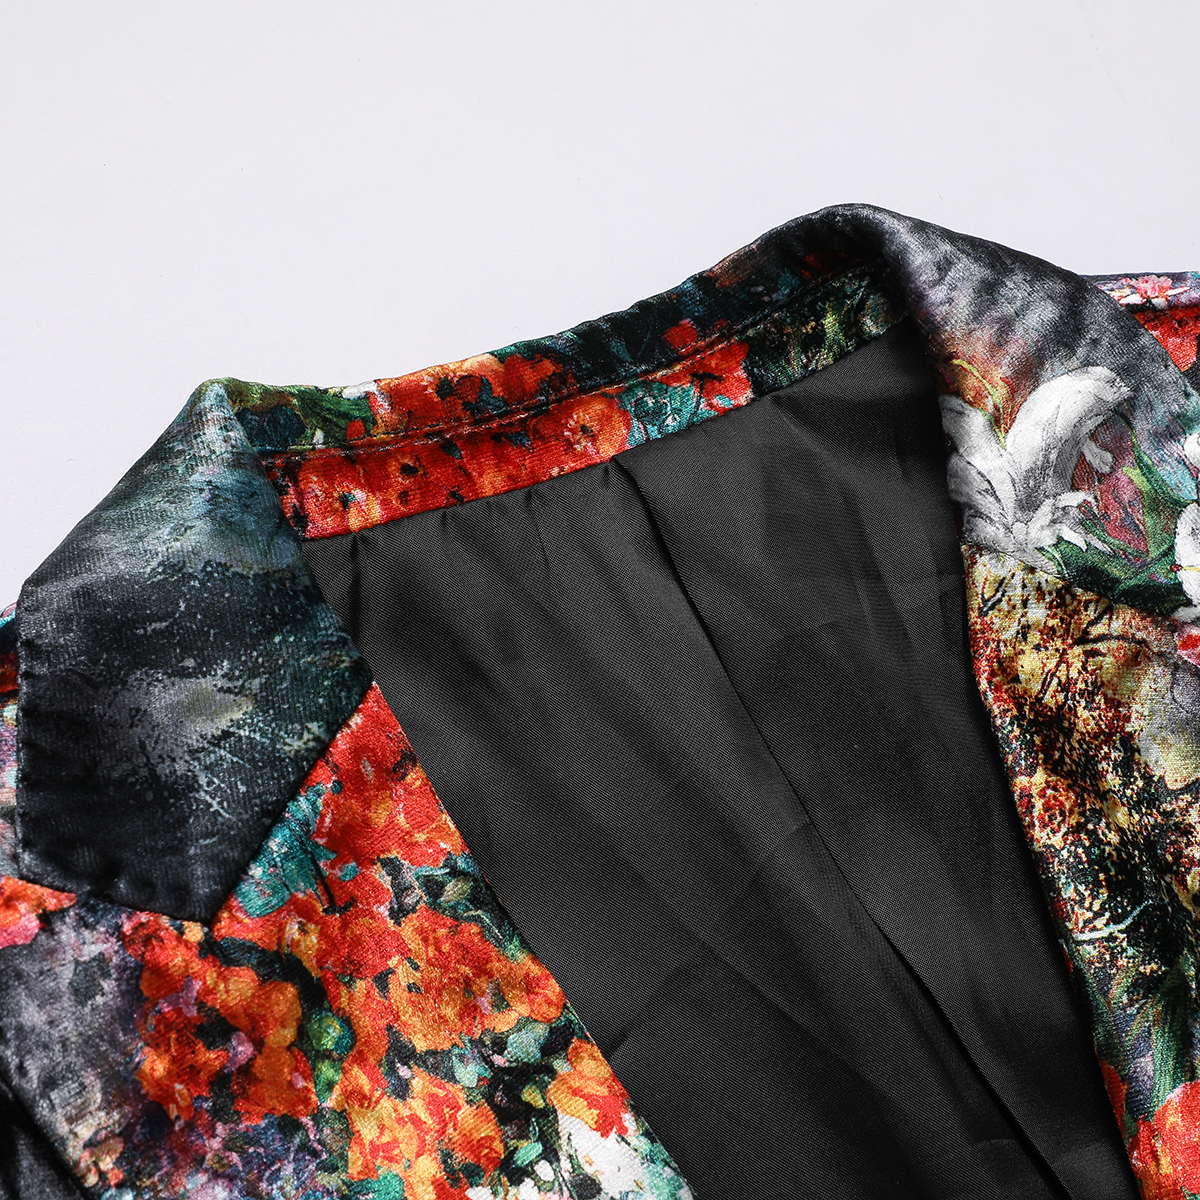 Men’s floral printed velvet suit blazer